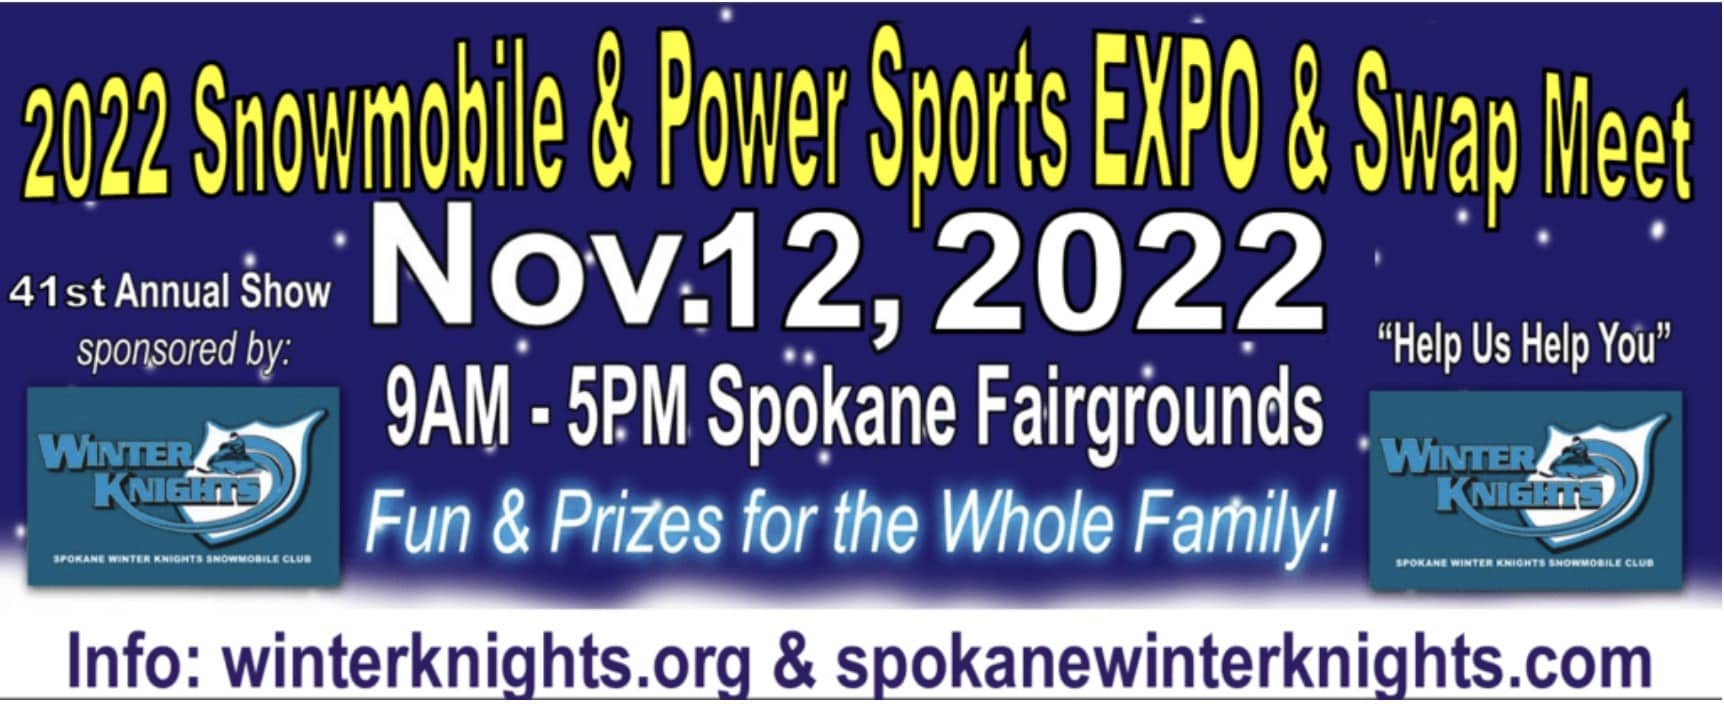 2022 Snowmobile and Power Sports Expo Swap Meet Spokane Fairgrounds Flyer